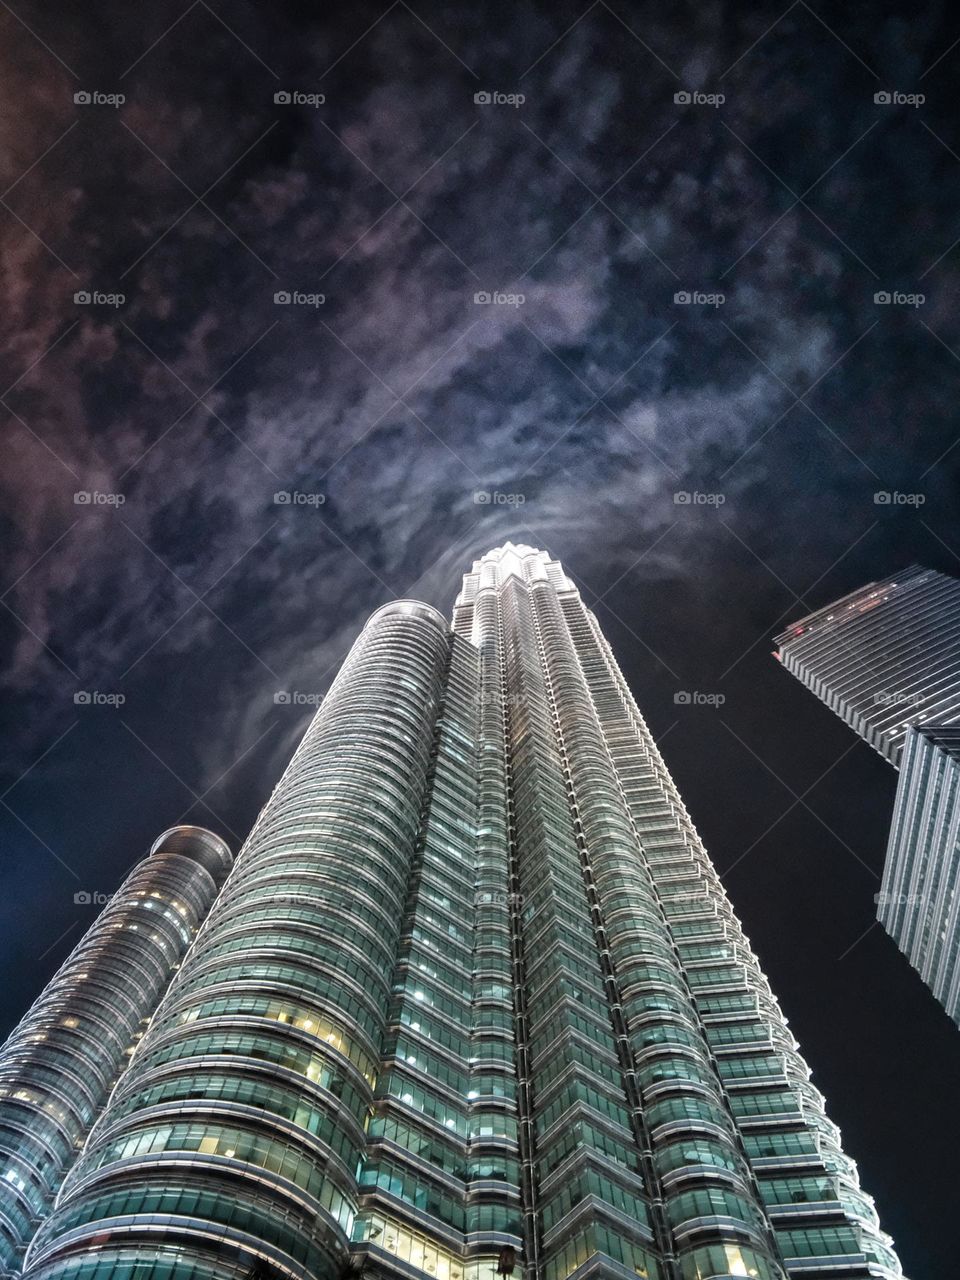 Illuminated clouds at the top of The Petronas Towers in Kuala Lumpur, Malaysia